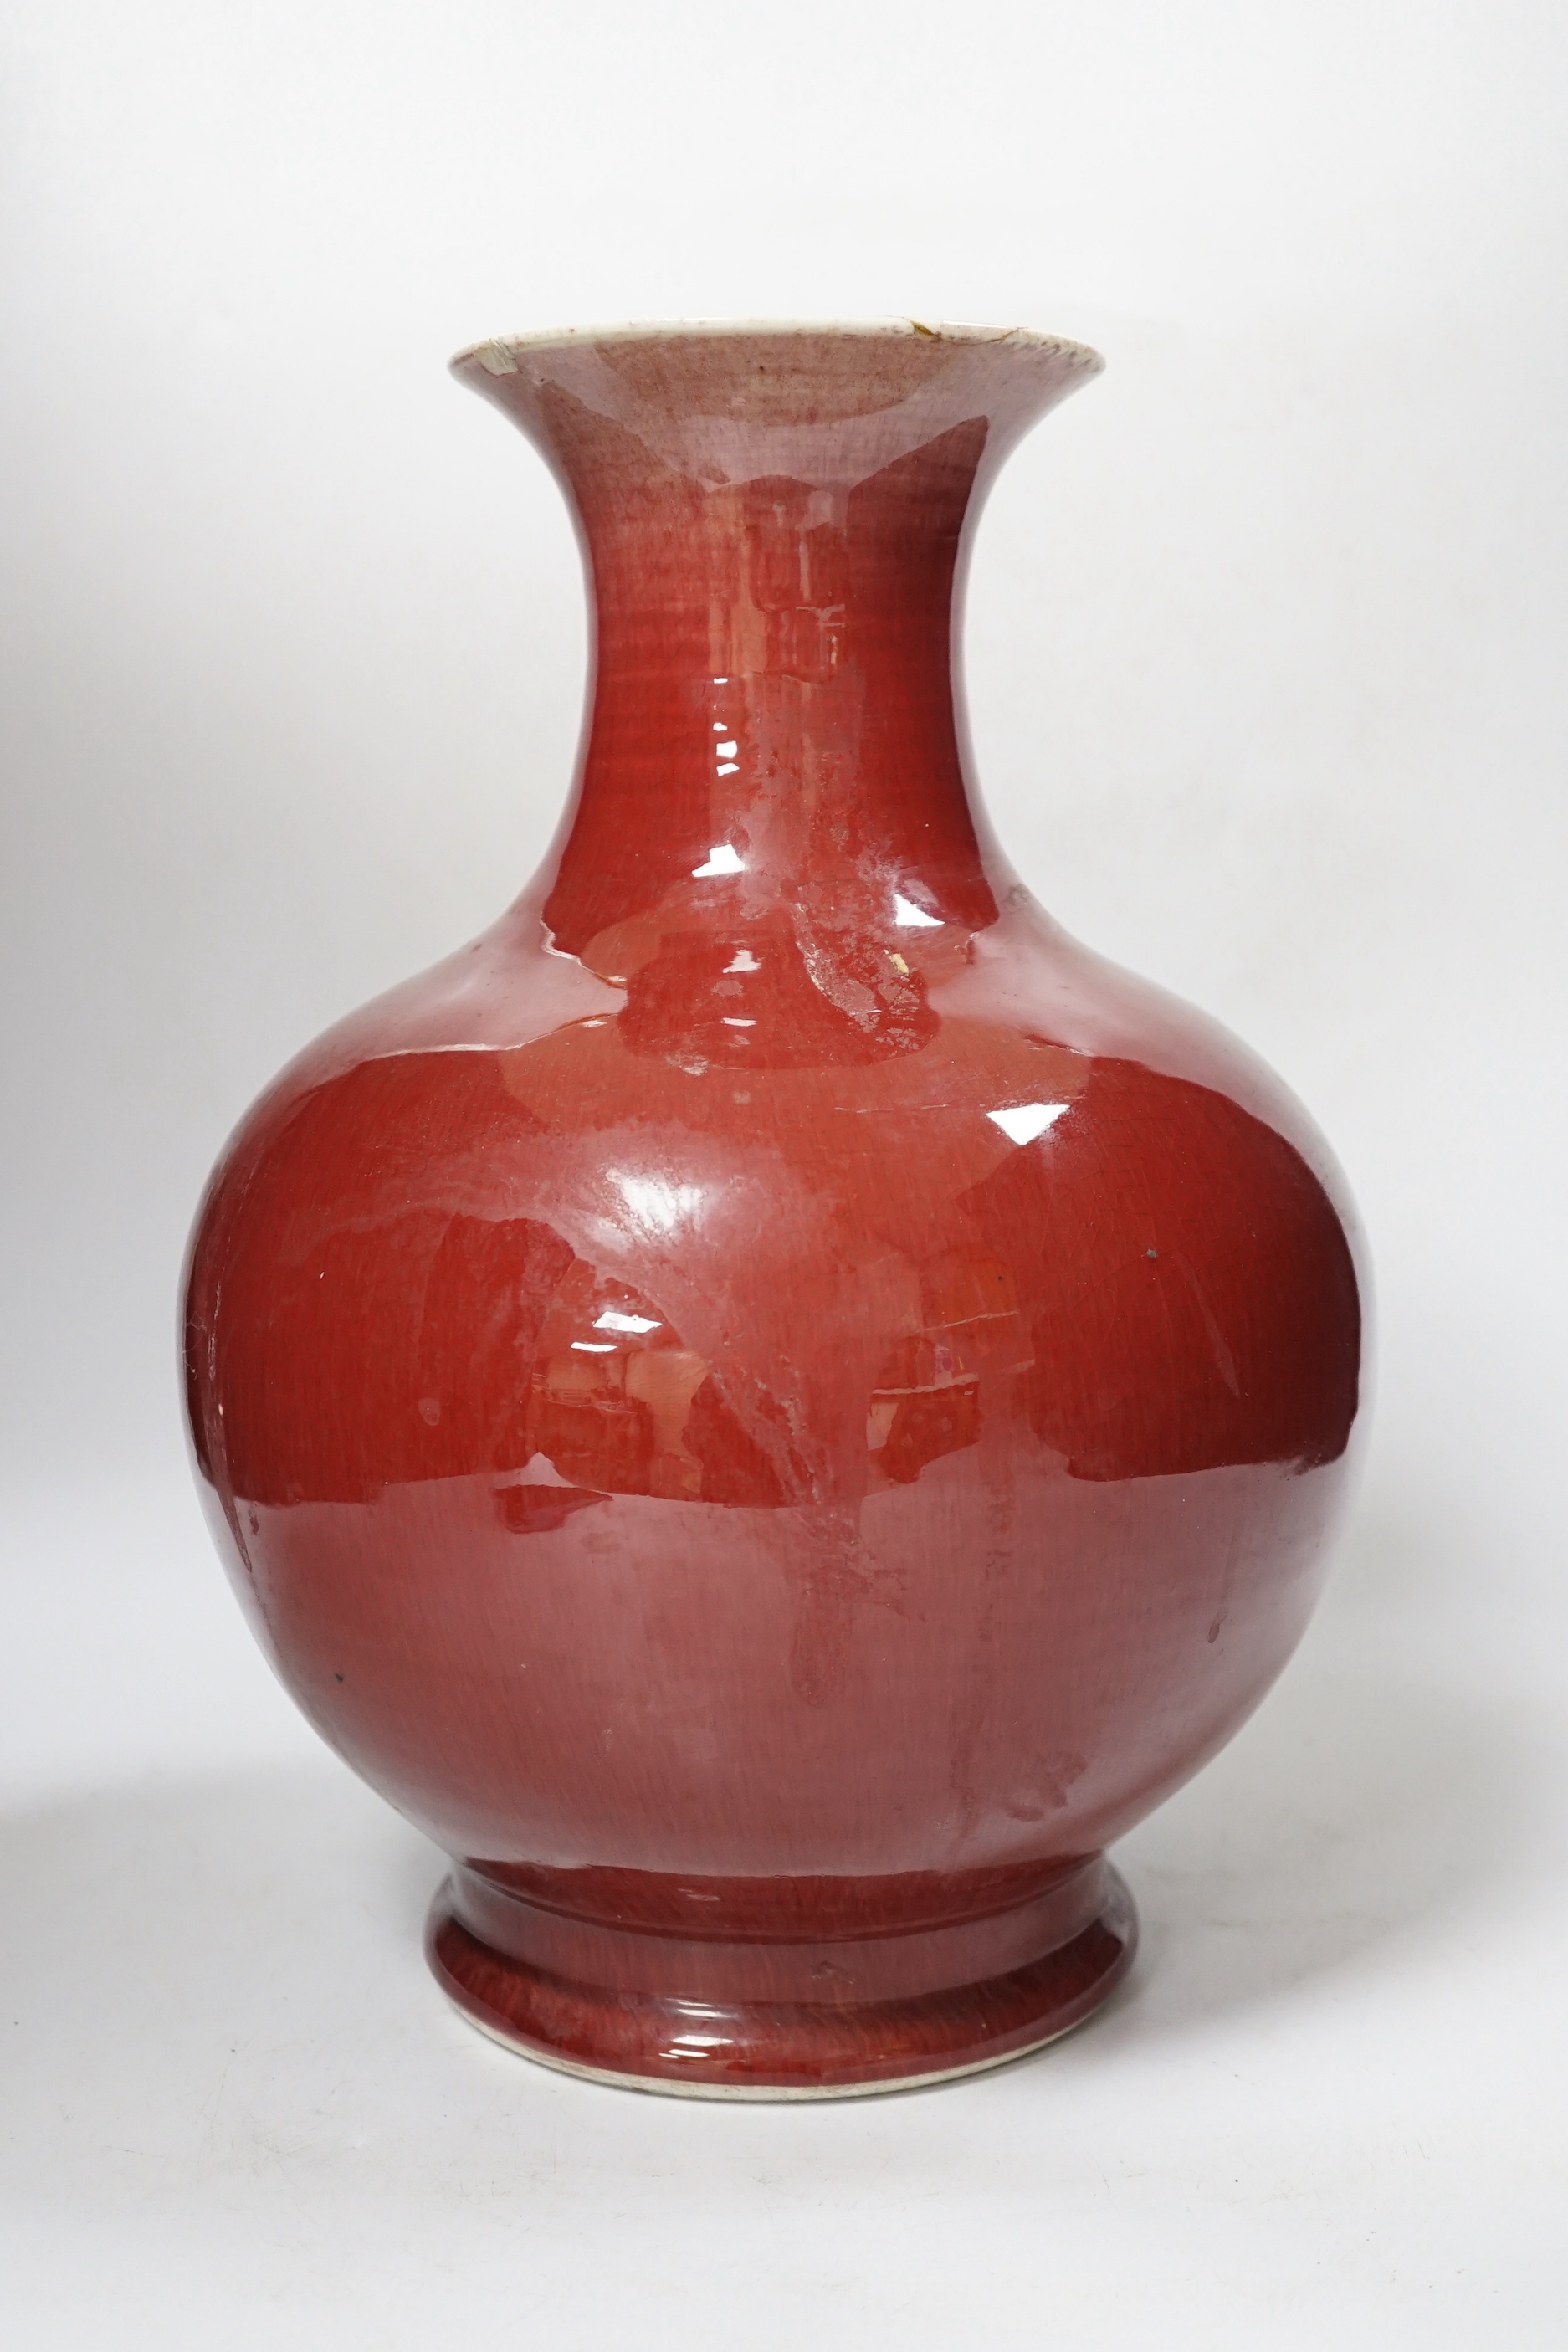 A 19th century Chinese sang de boeuf vase, 32cm high